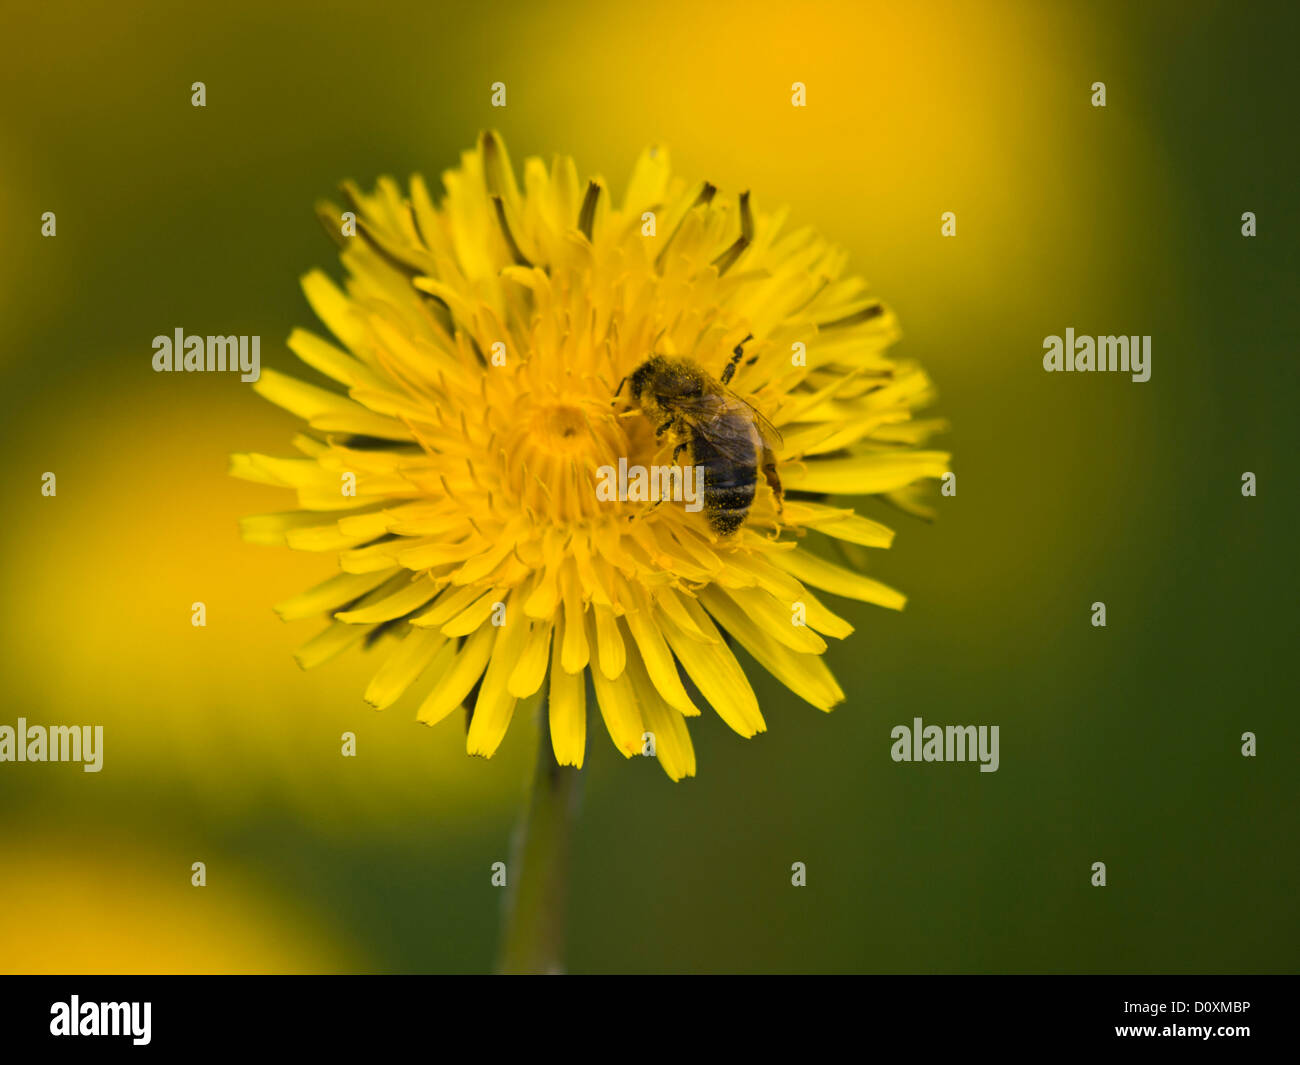 Field, spring, grass, green, yellow, dandelion, flower, nature, plant, Switzerland, flora, Stock Photo